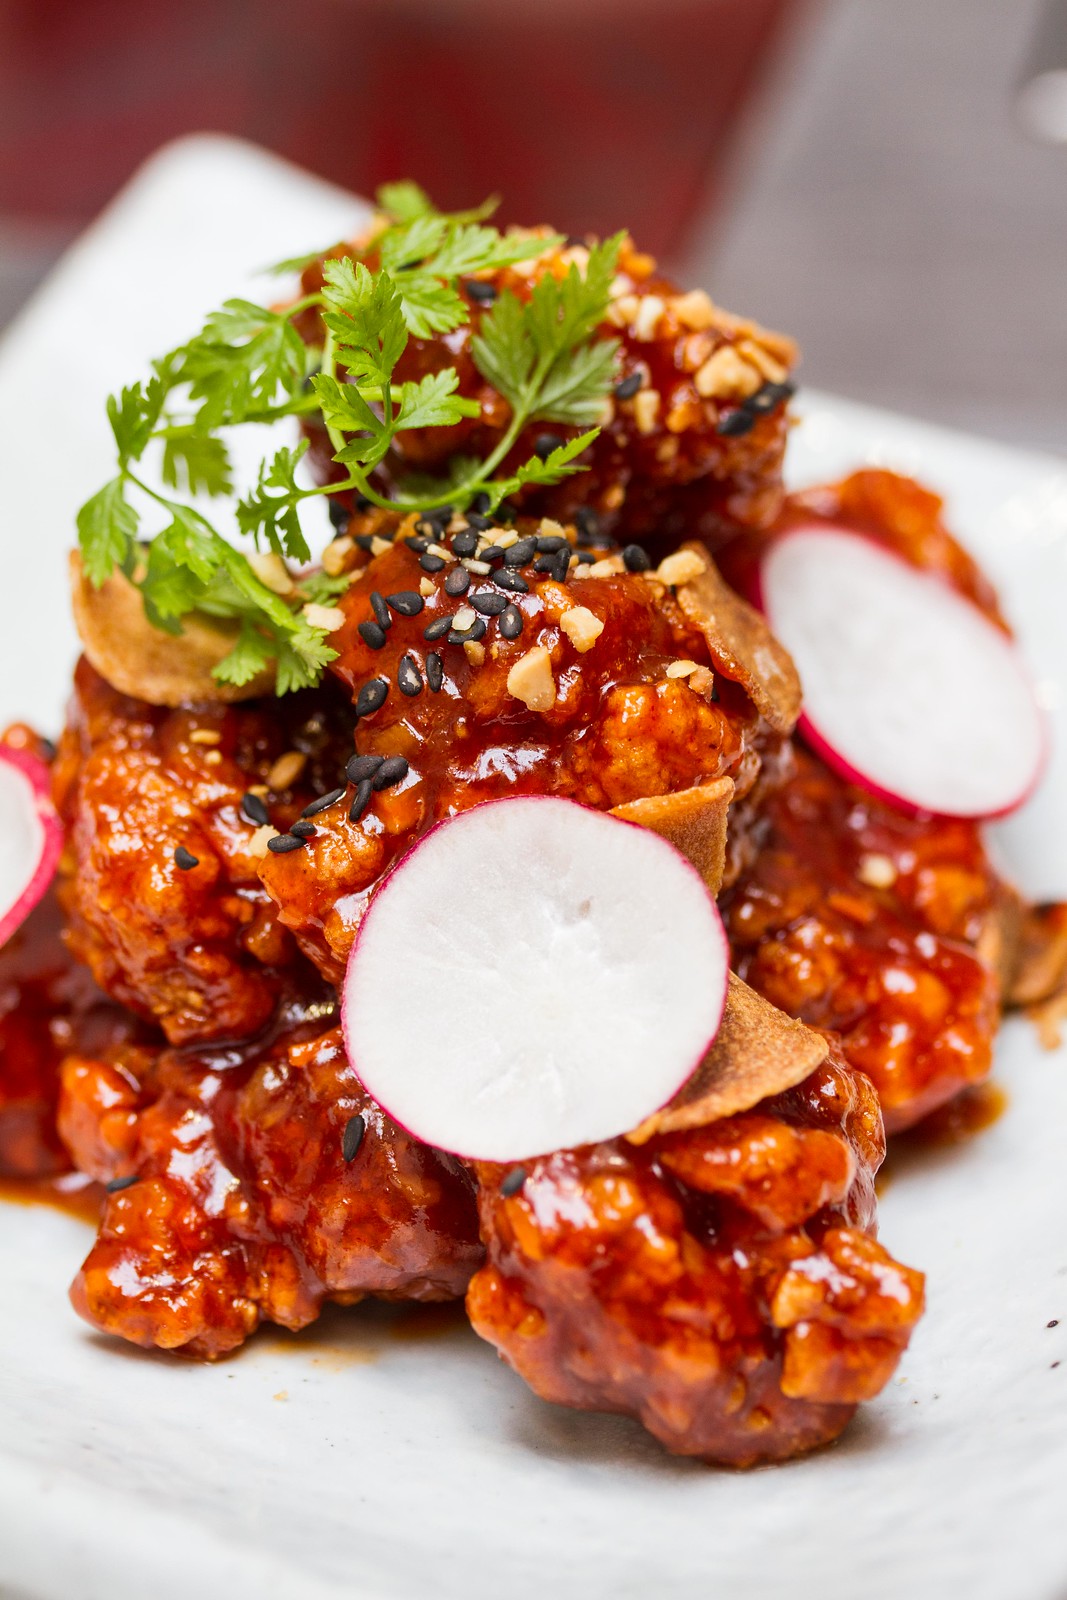 Suntec City Restaurants: Kimchi Korean Restaurant's Yam Yeong Chicken